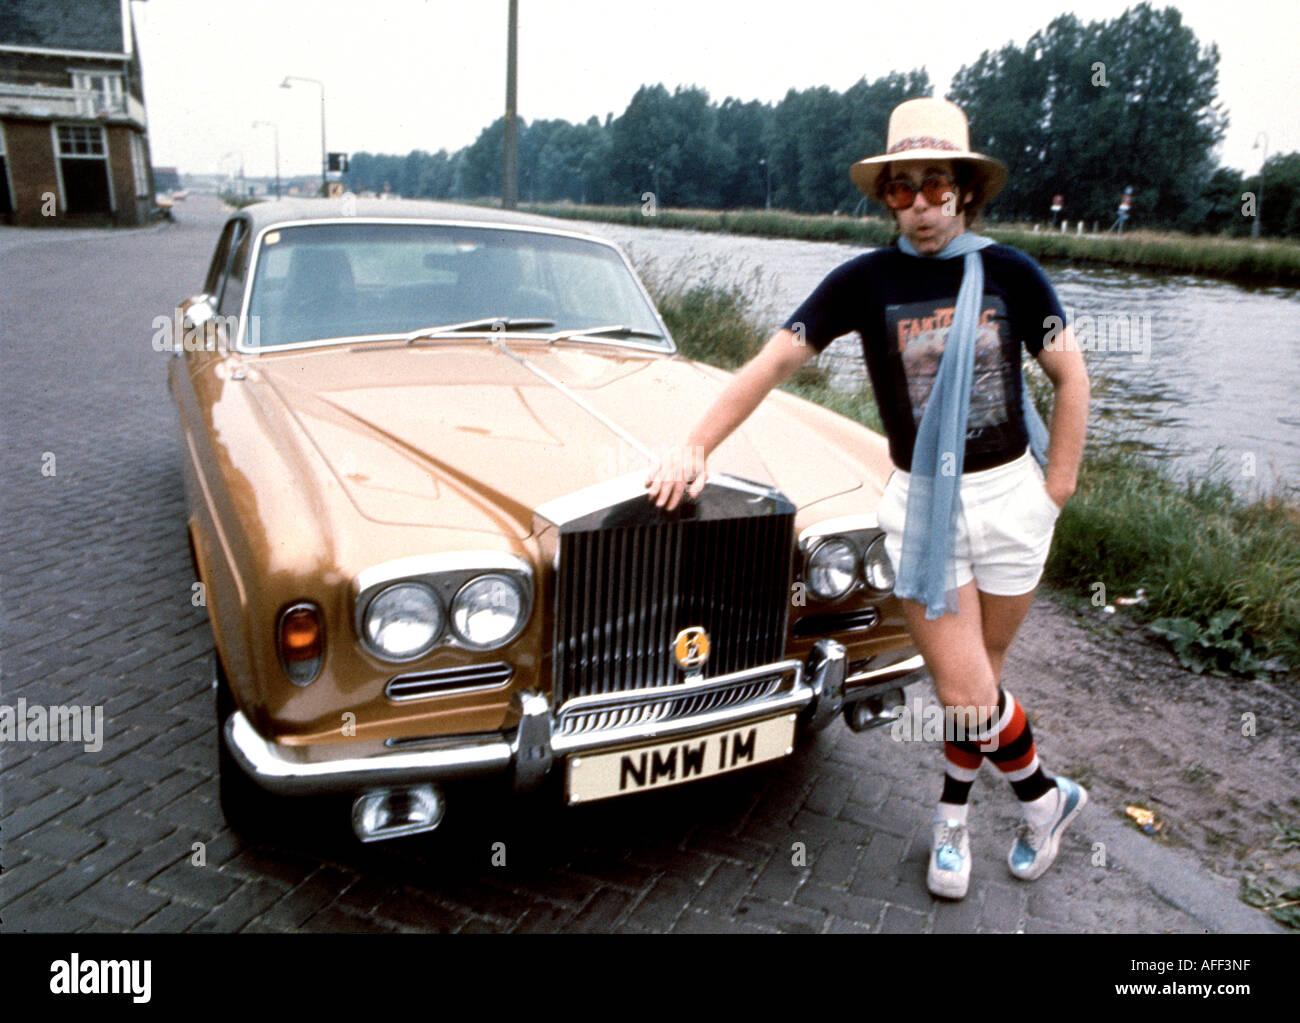 Elton john car hi-res stock photography and images - Alamy